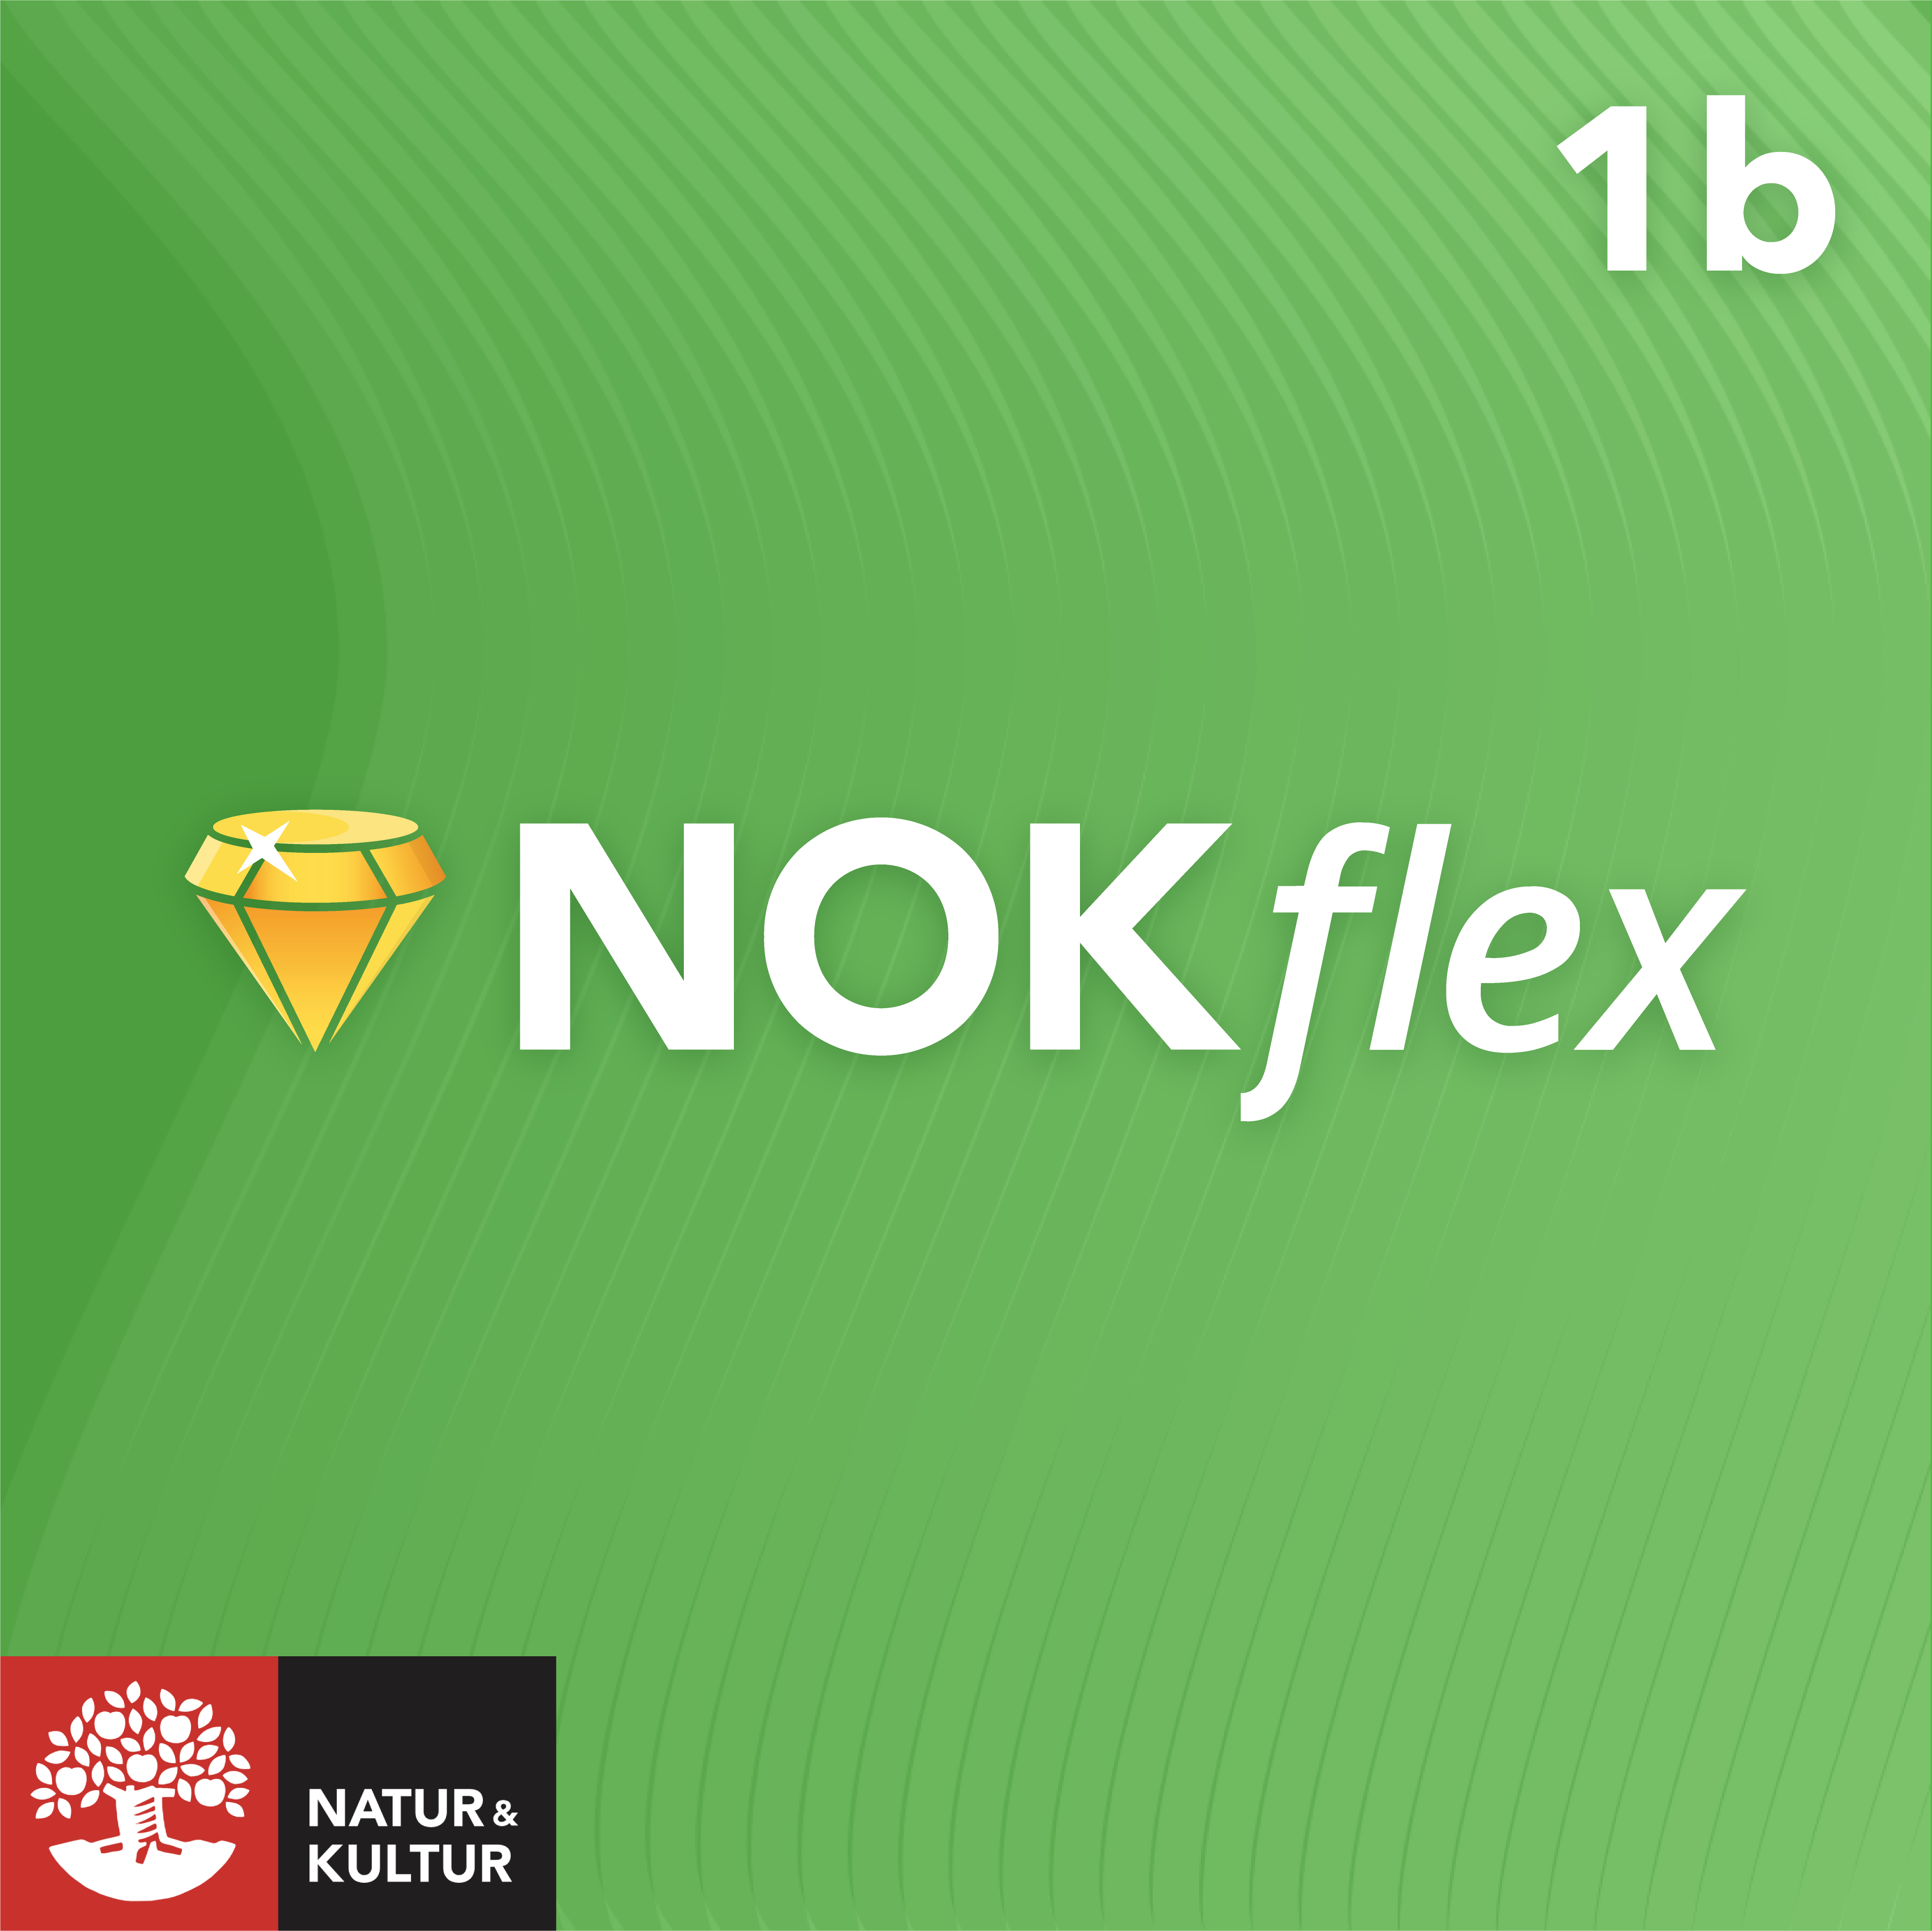 NOKflex Matematik 1b